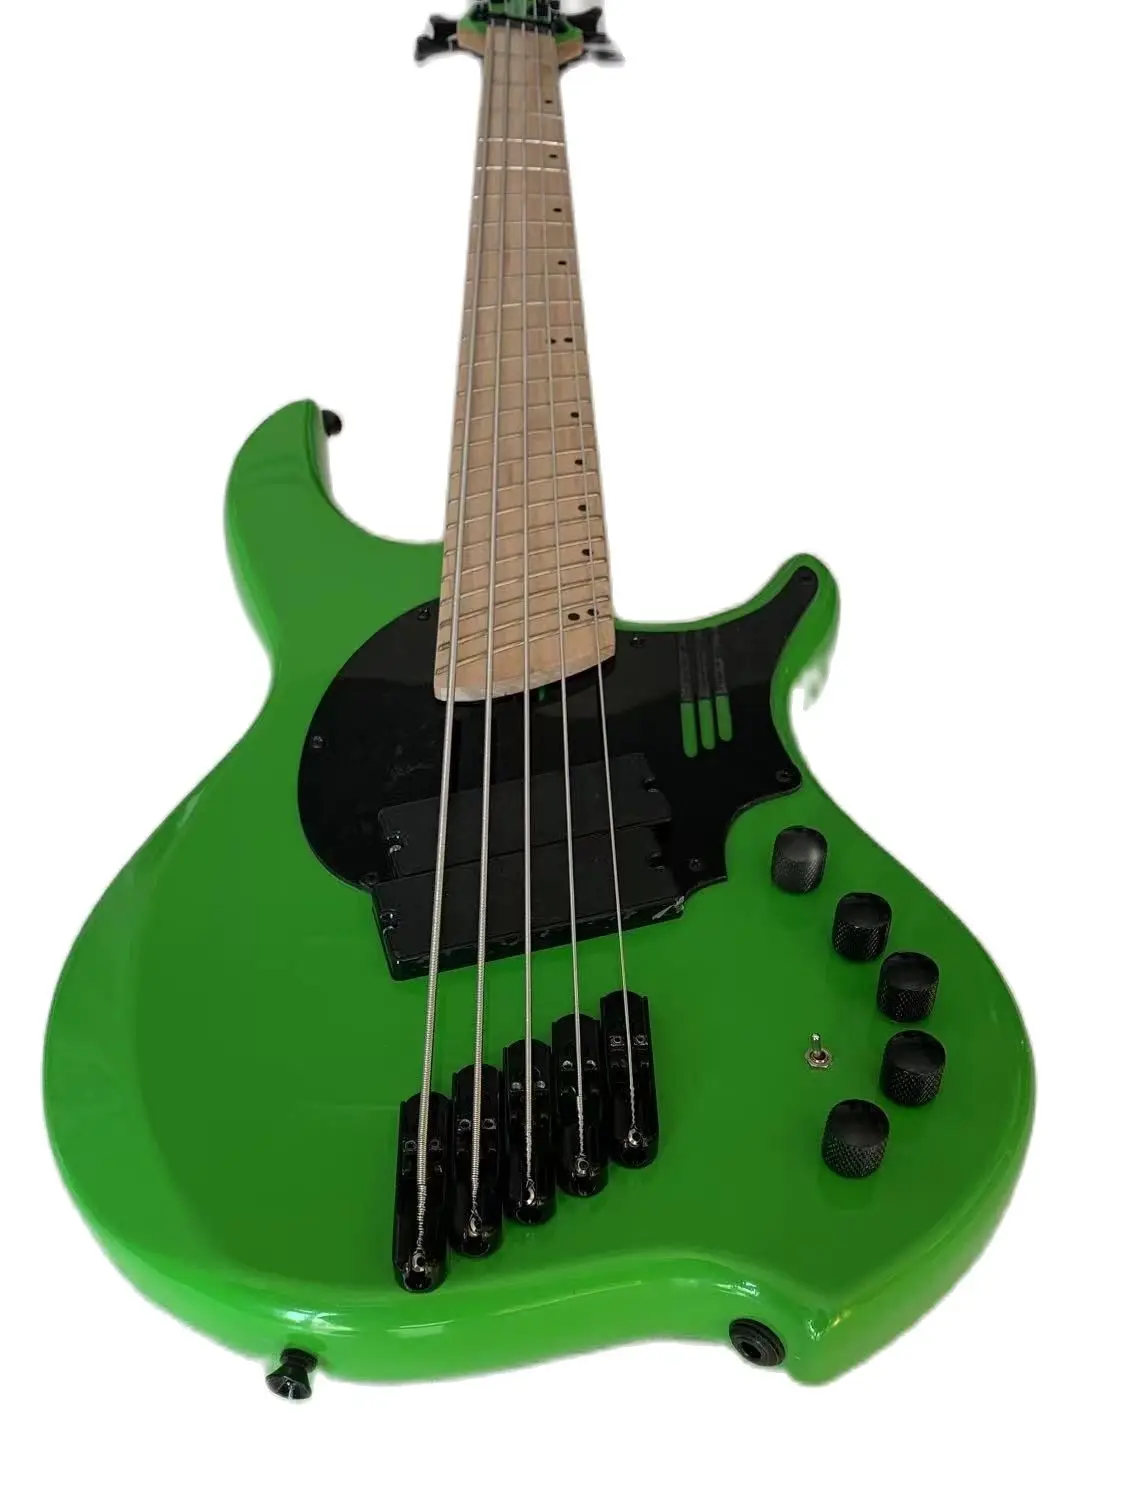 Dw high-end baixo oblíquo personalizado de 5 cordas, corpo verde fluorescente, fingerboard oblíquo, agudos de 34 polegadas, baixo de 37 polegadas, preto hardw